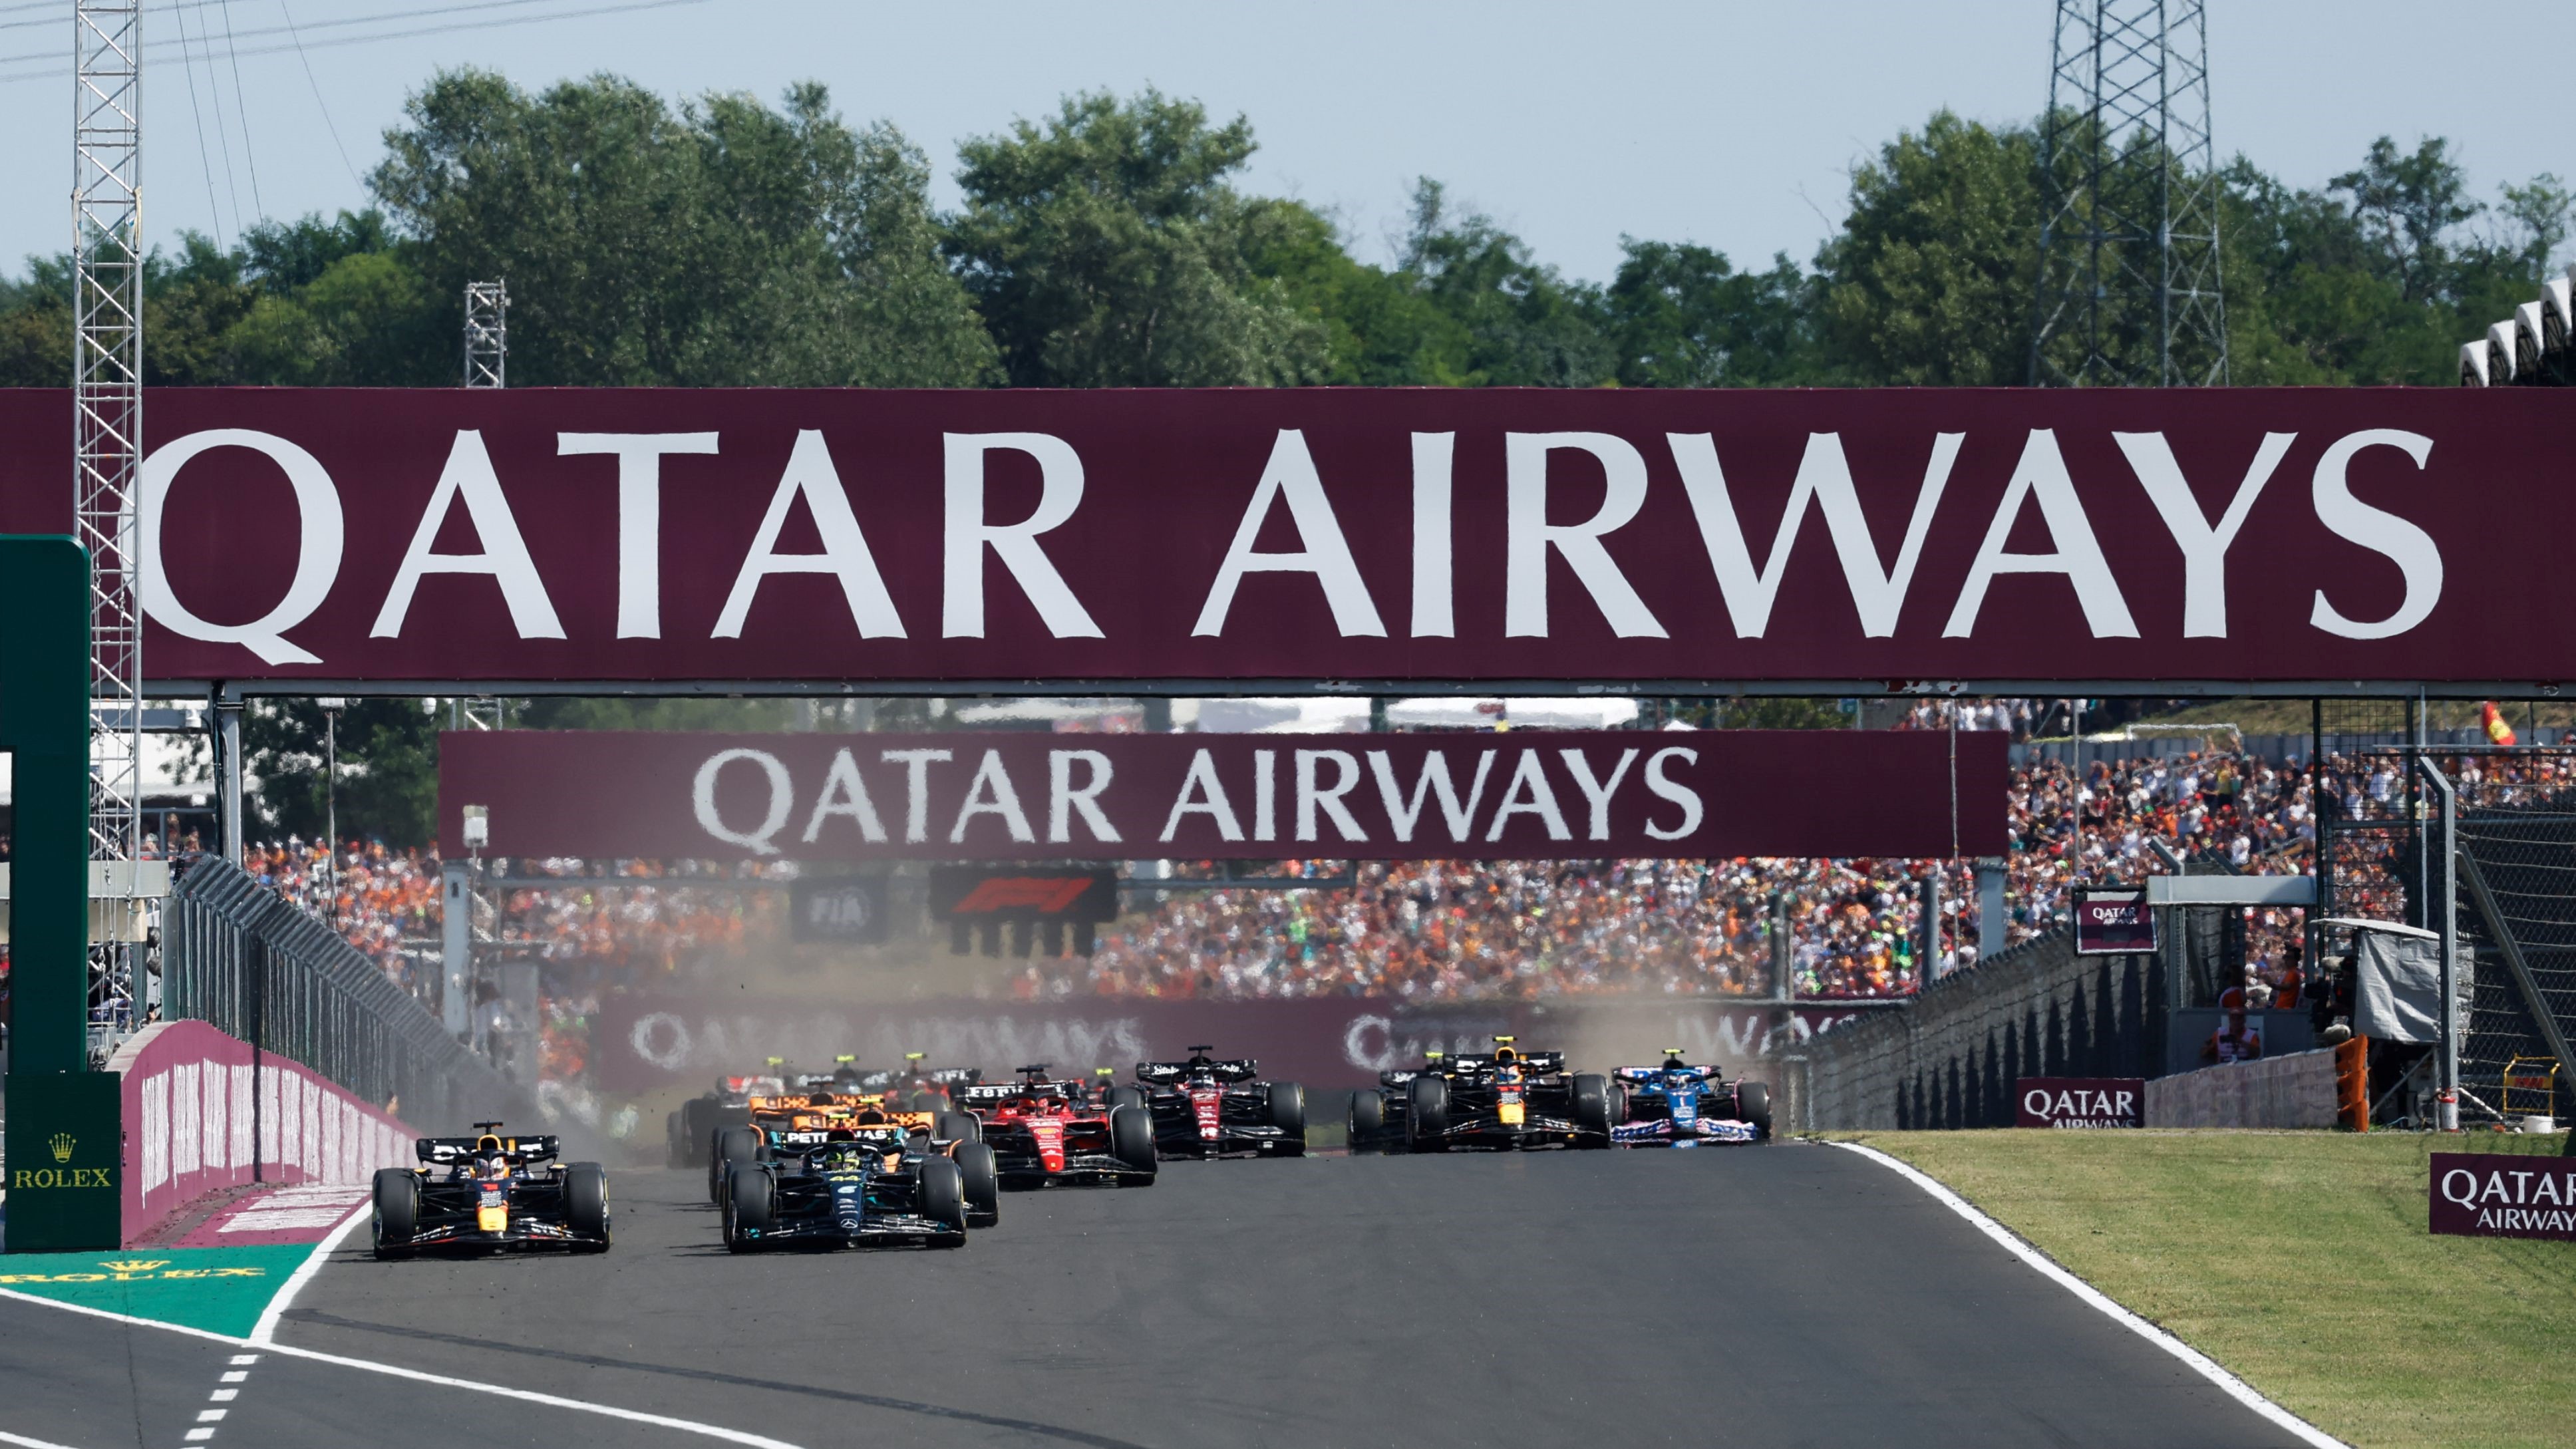 Right Formula Lands Deal For Qatar Airways' F1 Global Partnership